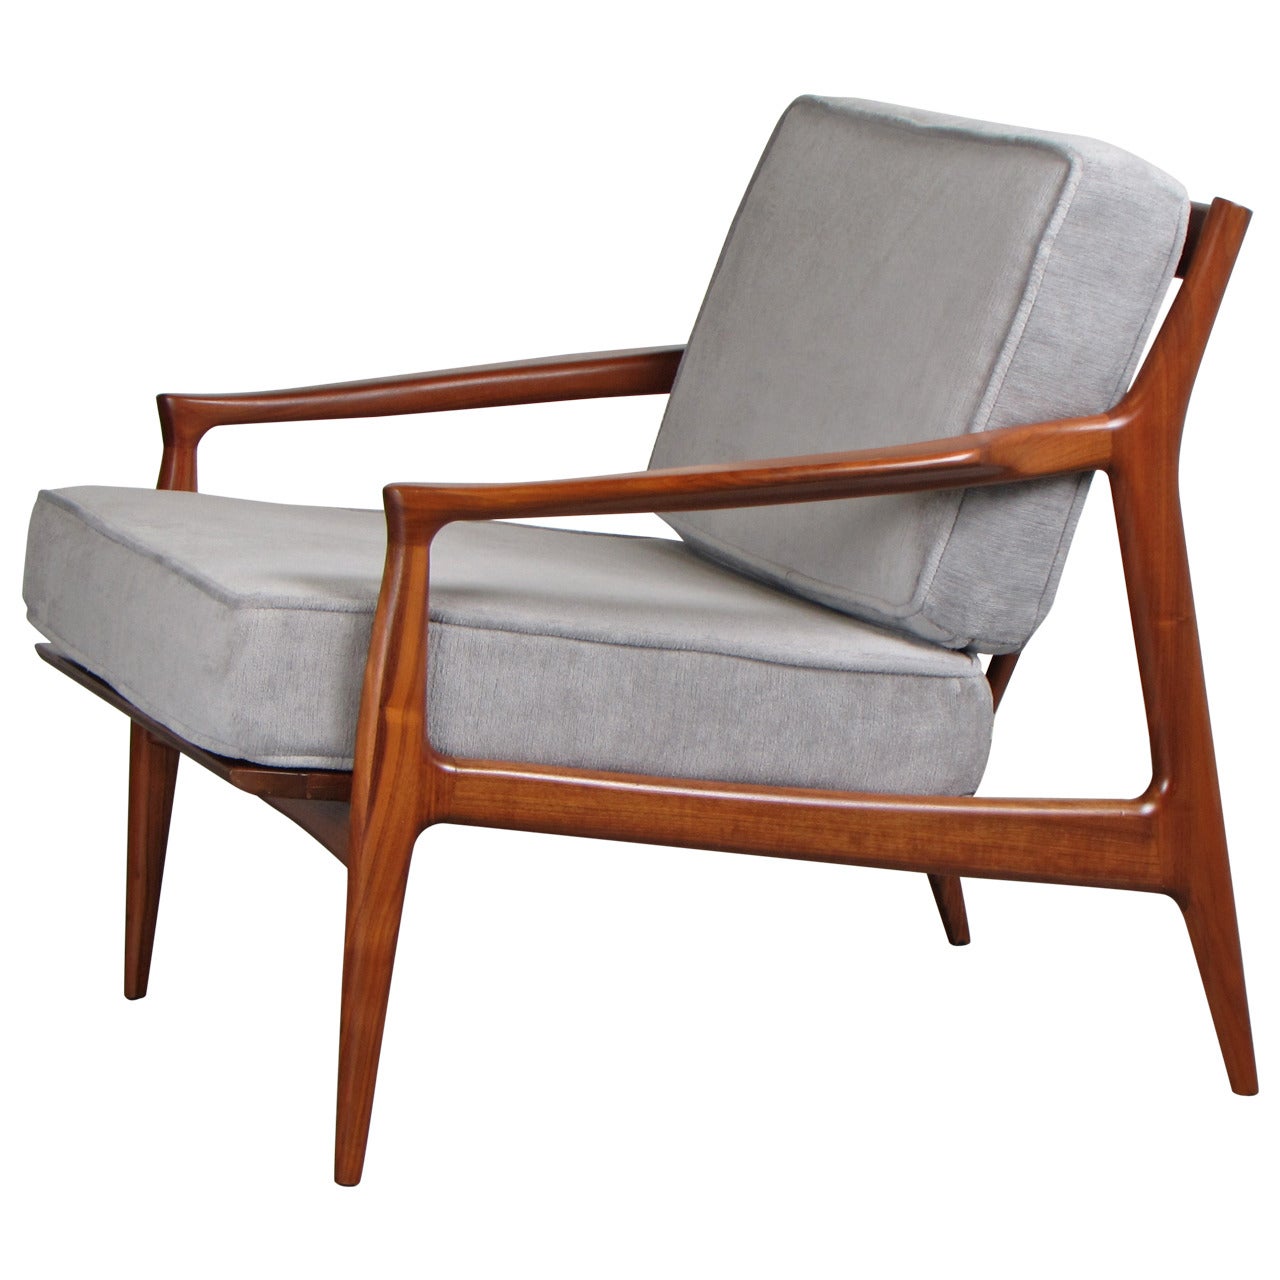 Sculptural Danish Modern Teak Lounge Chair by Ib Kofod-Larsen, 1960s